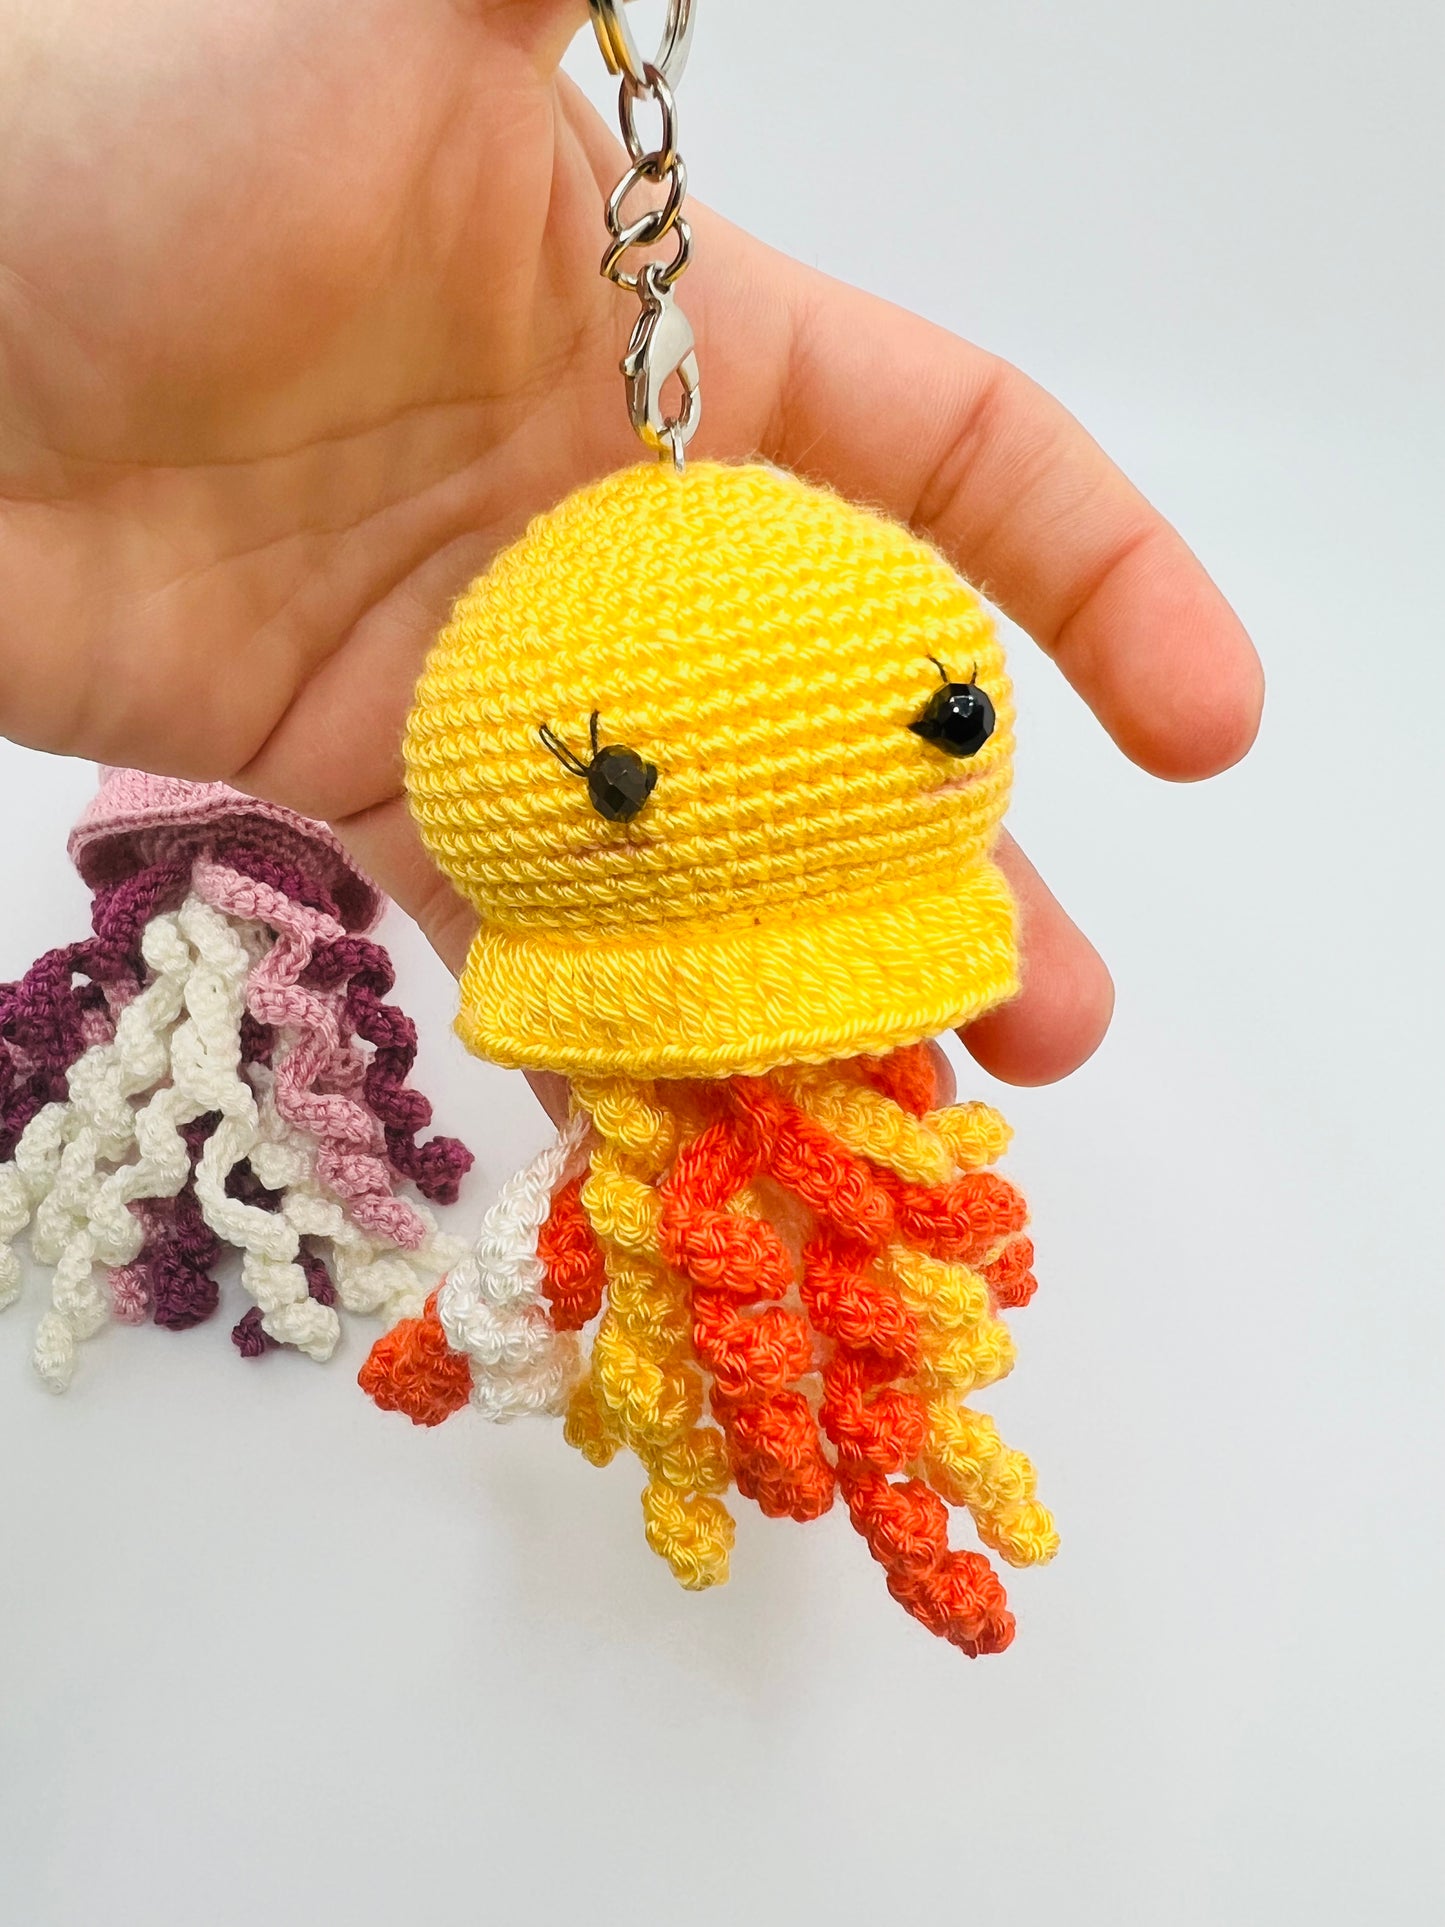 Stuffed Jellyfish Keychain Toy - (Purple & Yellow) - Crochet Knitted Amigurumi Toy